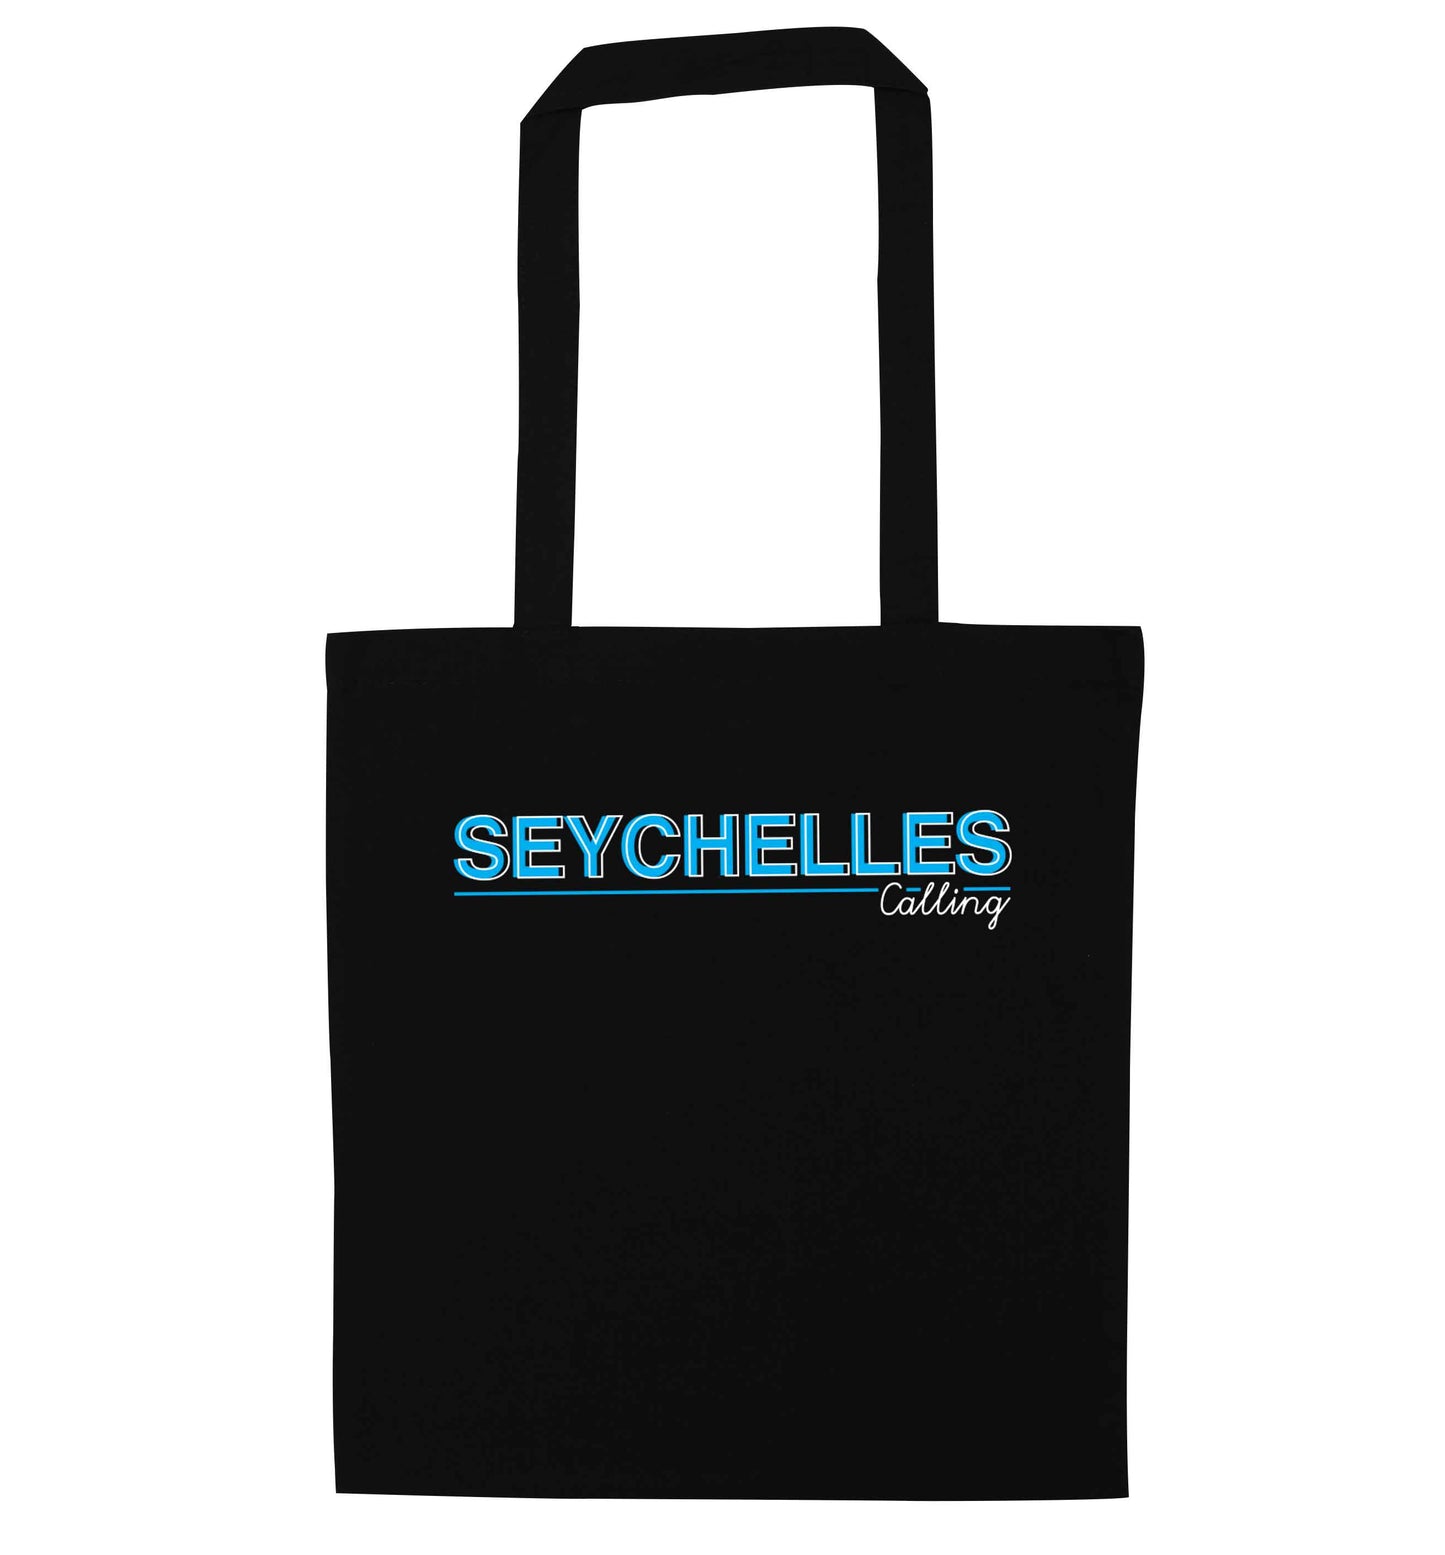 Seychelles calling black tote bag